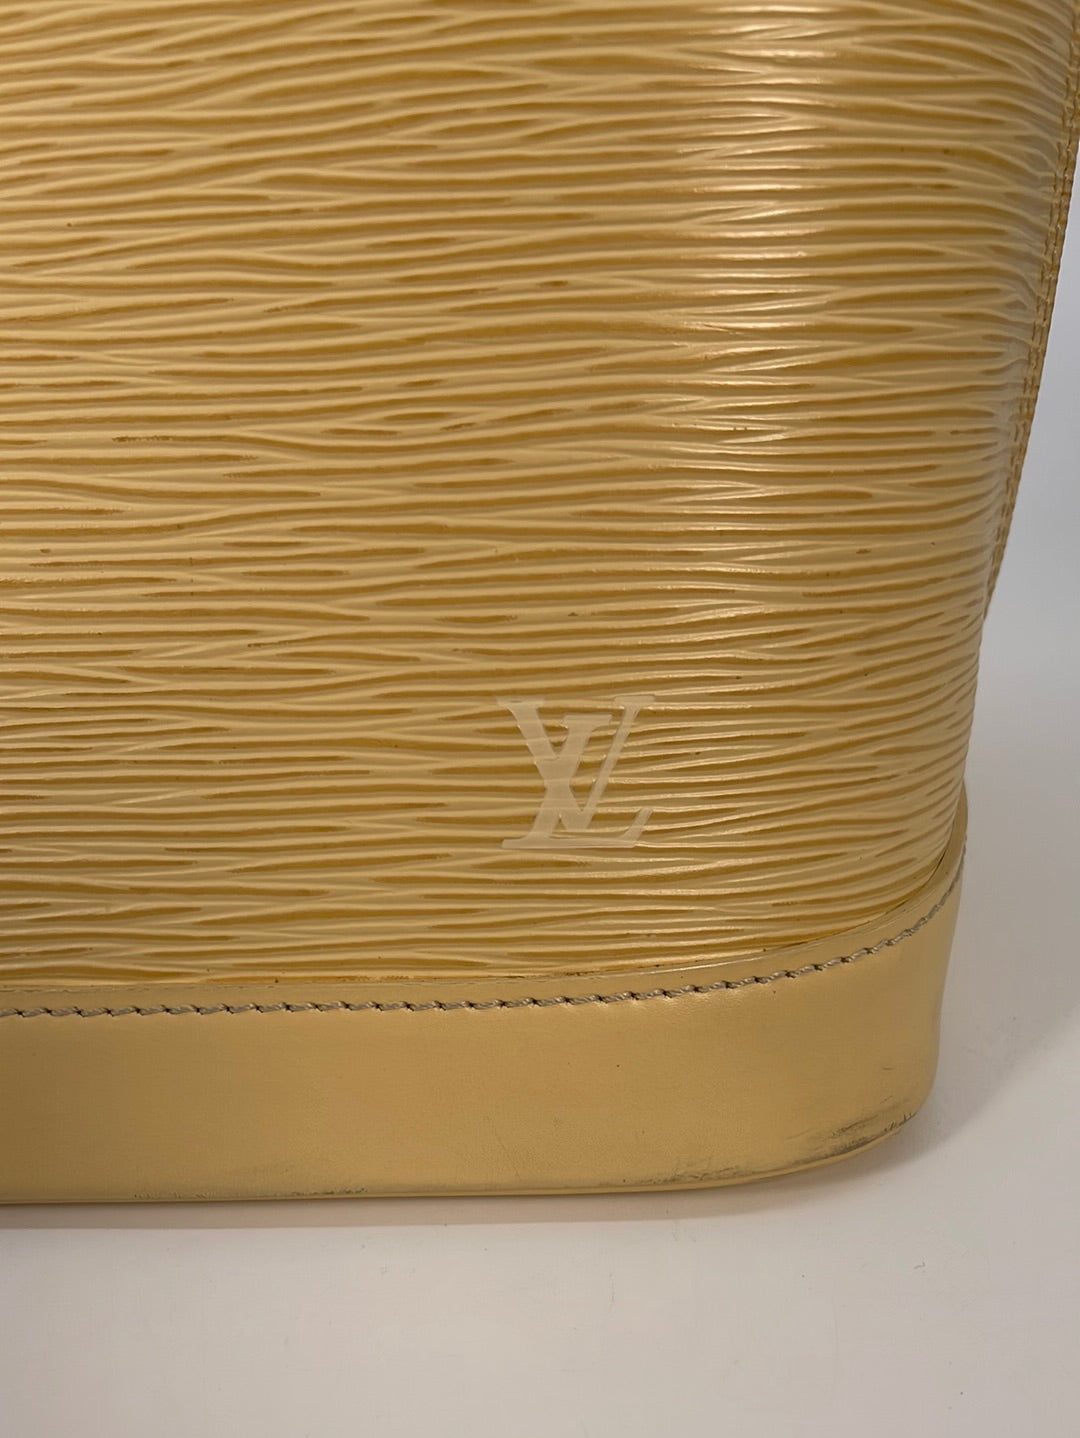 PRELOVED Louis Vuitton Vanilla Epi Alma PM Bag AR1010 020723